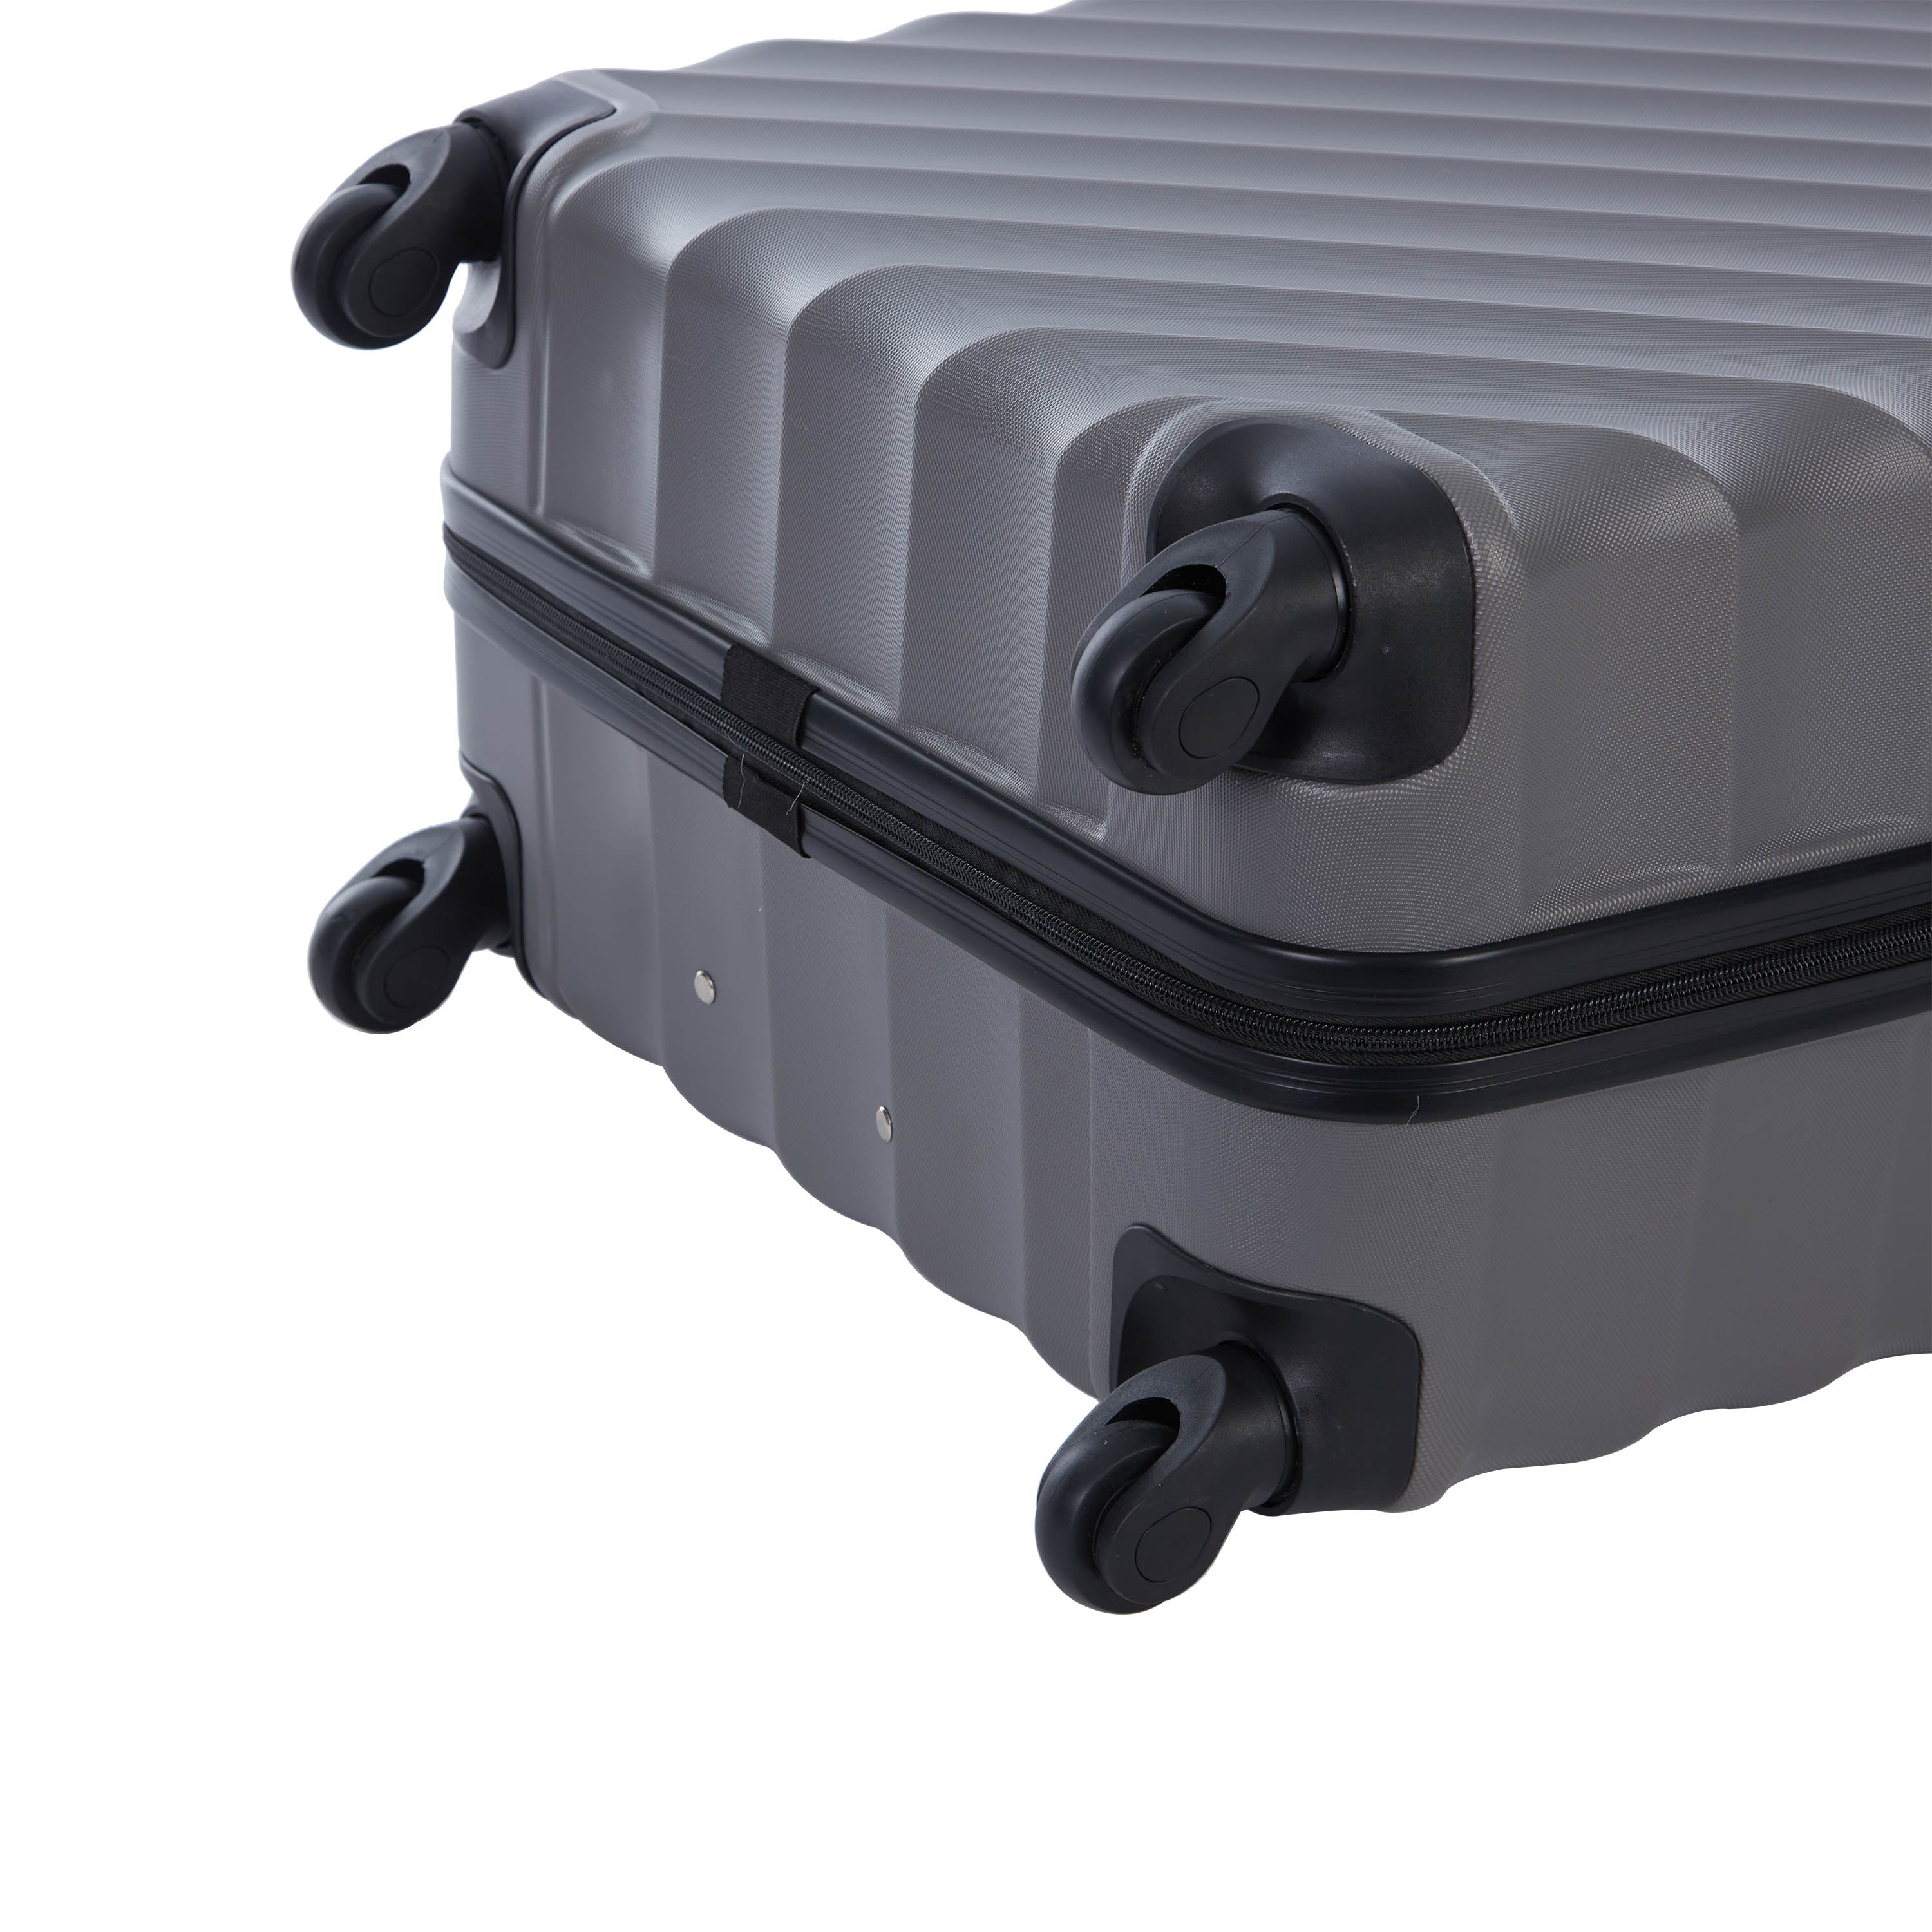 TPRC | Loola Collection | 3PCS Expandable Luggage Set W/ 4-Wheel System